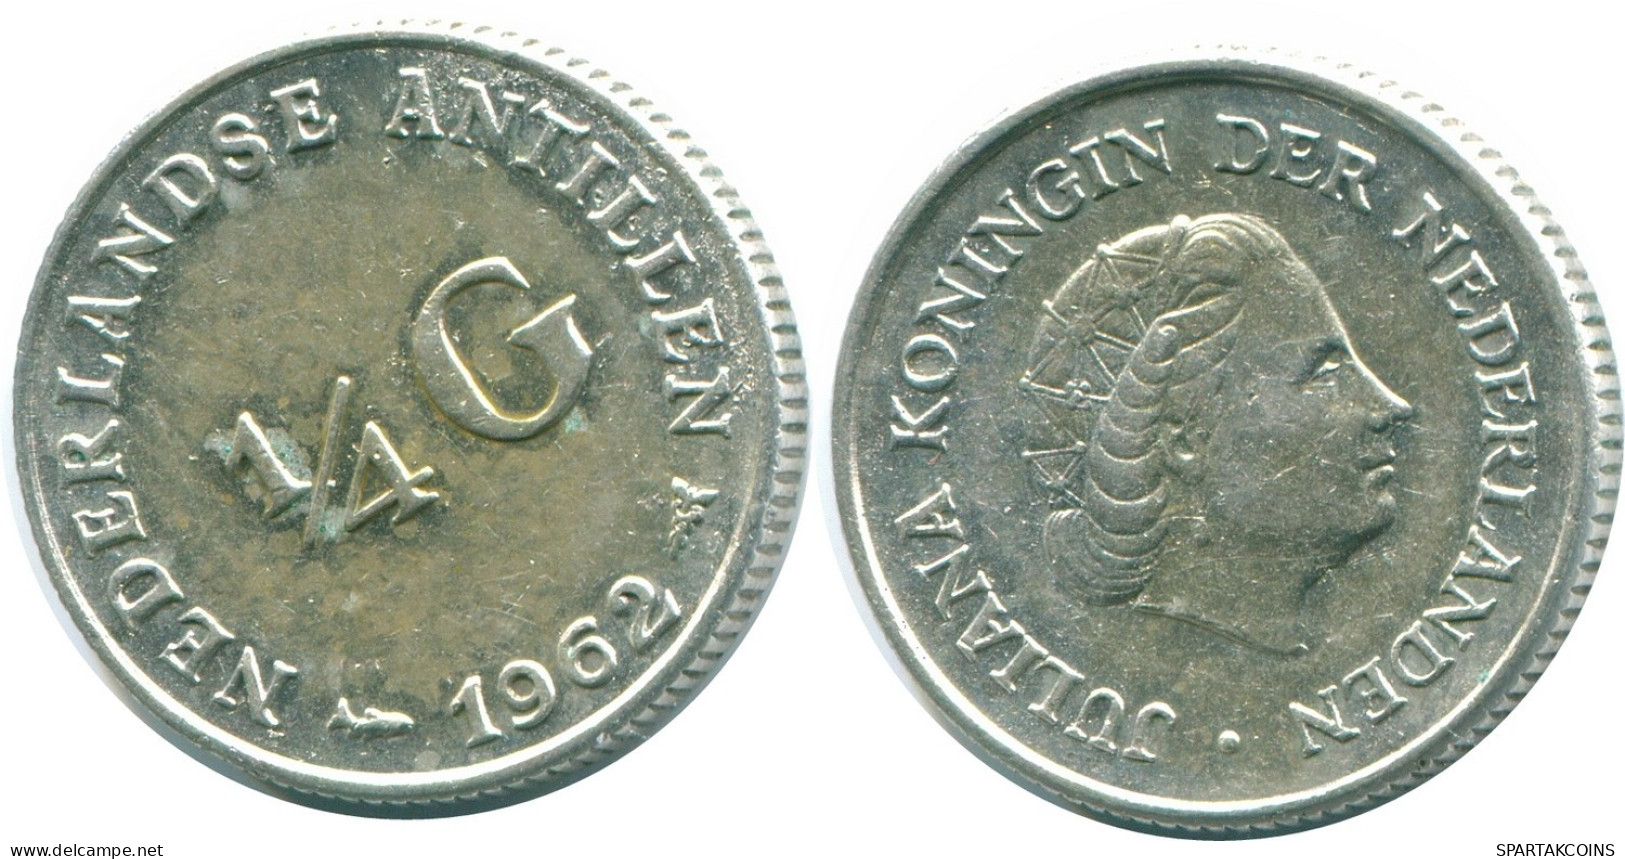 1/4 GULDEN 1962 NETHERLANDS ANTILLES SILVER Colonial Coin #NL11105.4.U.A - Nederlandse Antillen